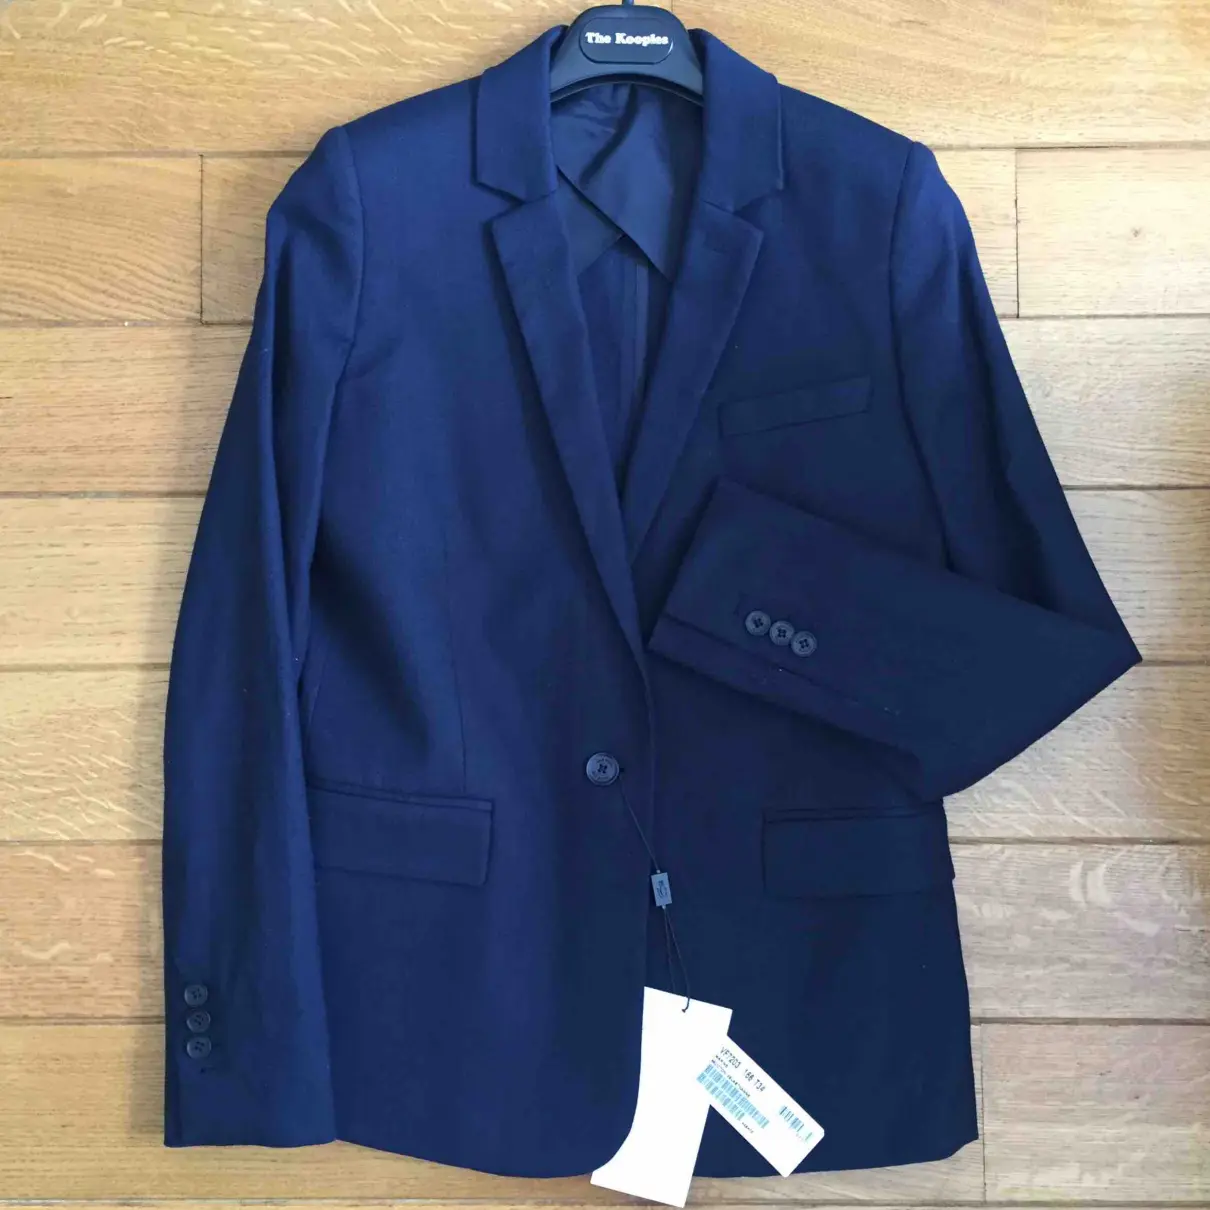 Buy Lacoste Blue Cotton Jacket online